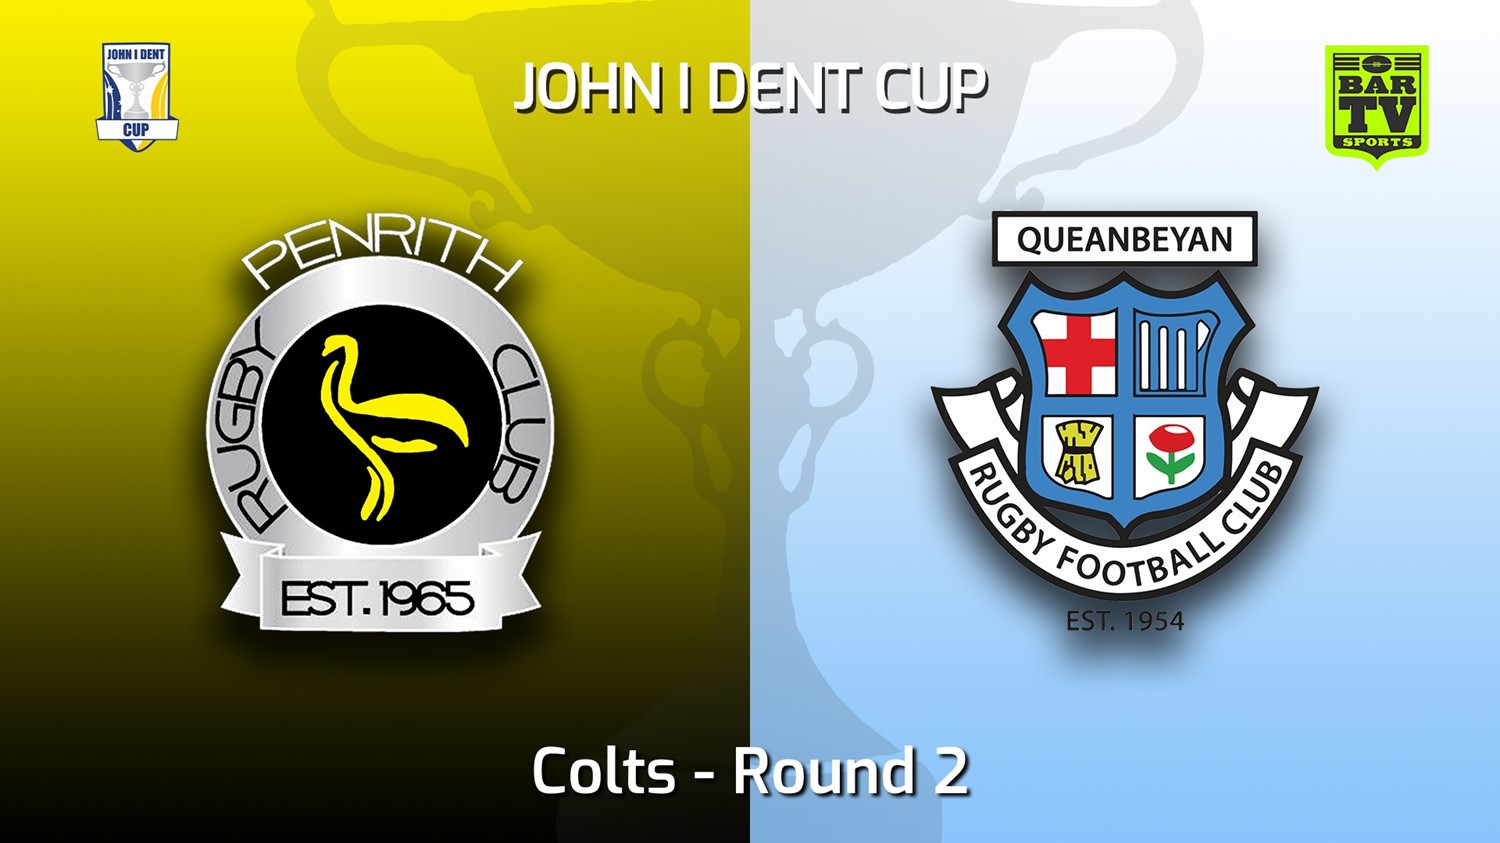 220430-John I Dent (ACT) Round 2 - Colts - Penrith Emus v Queanbeyan Whites Slate Image